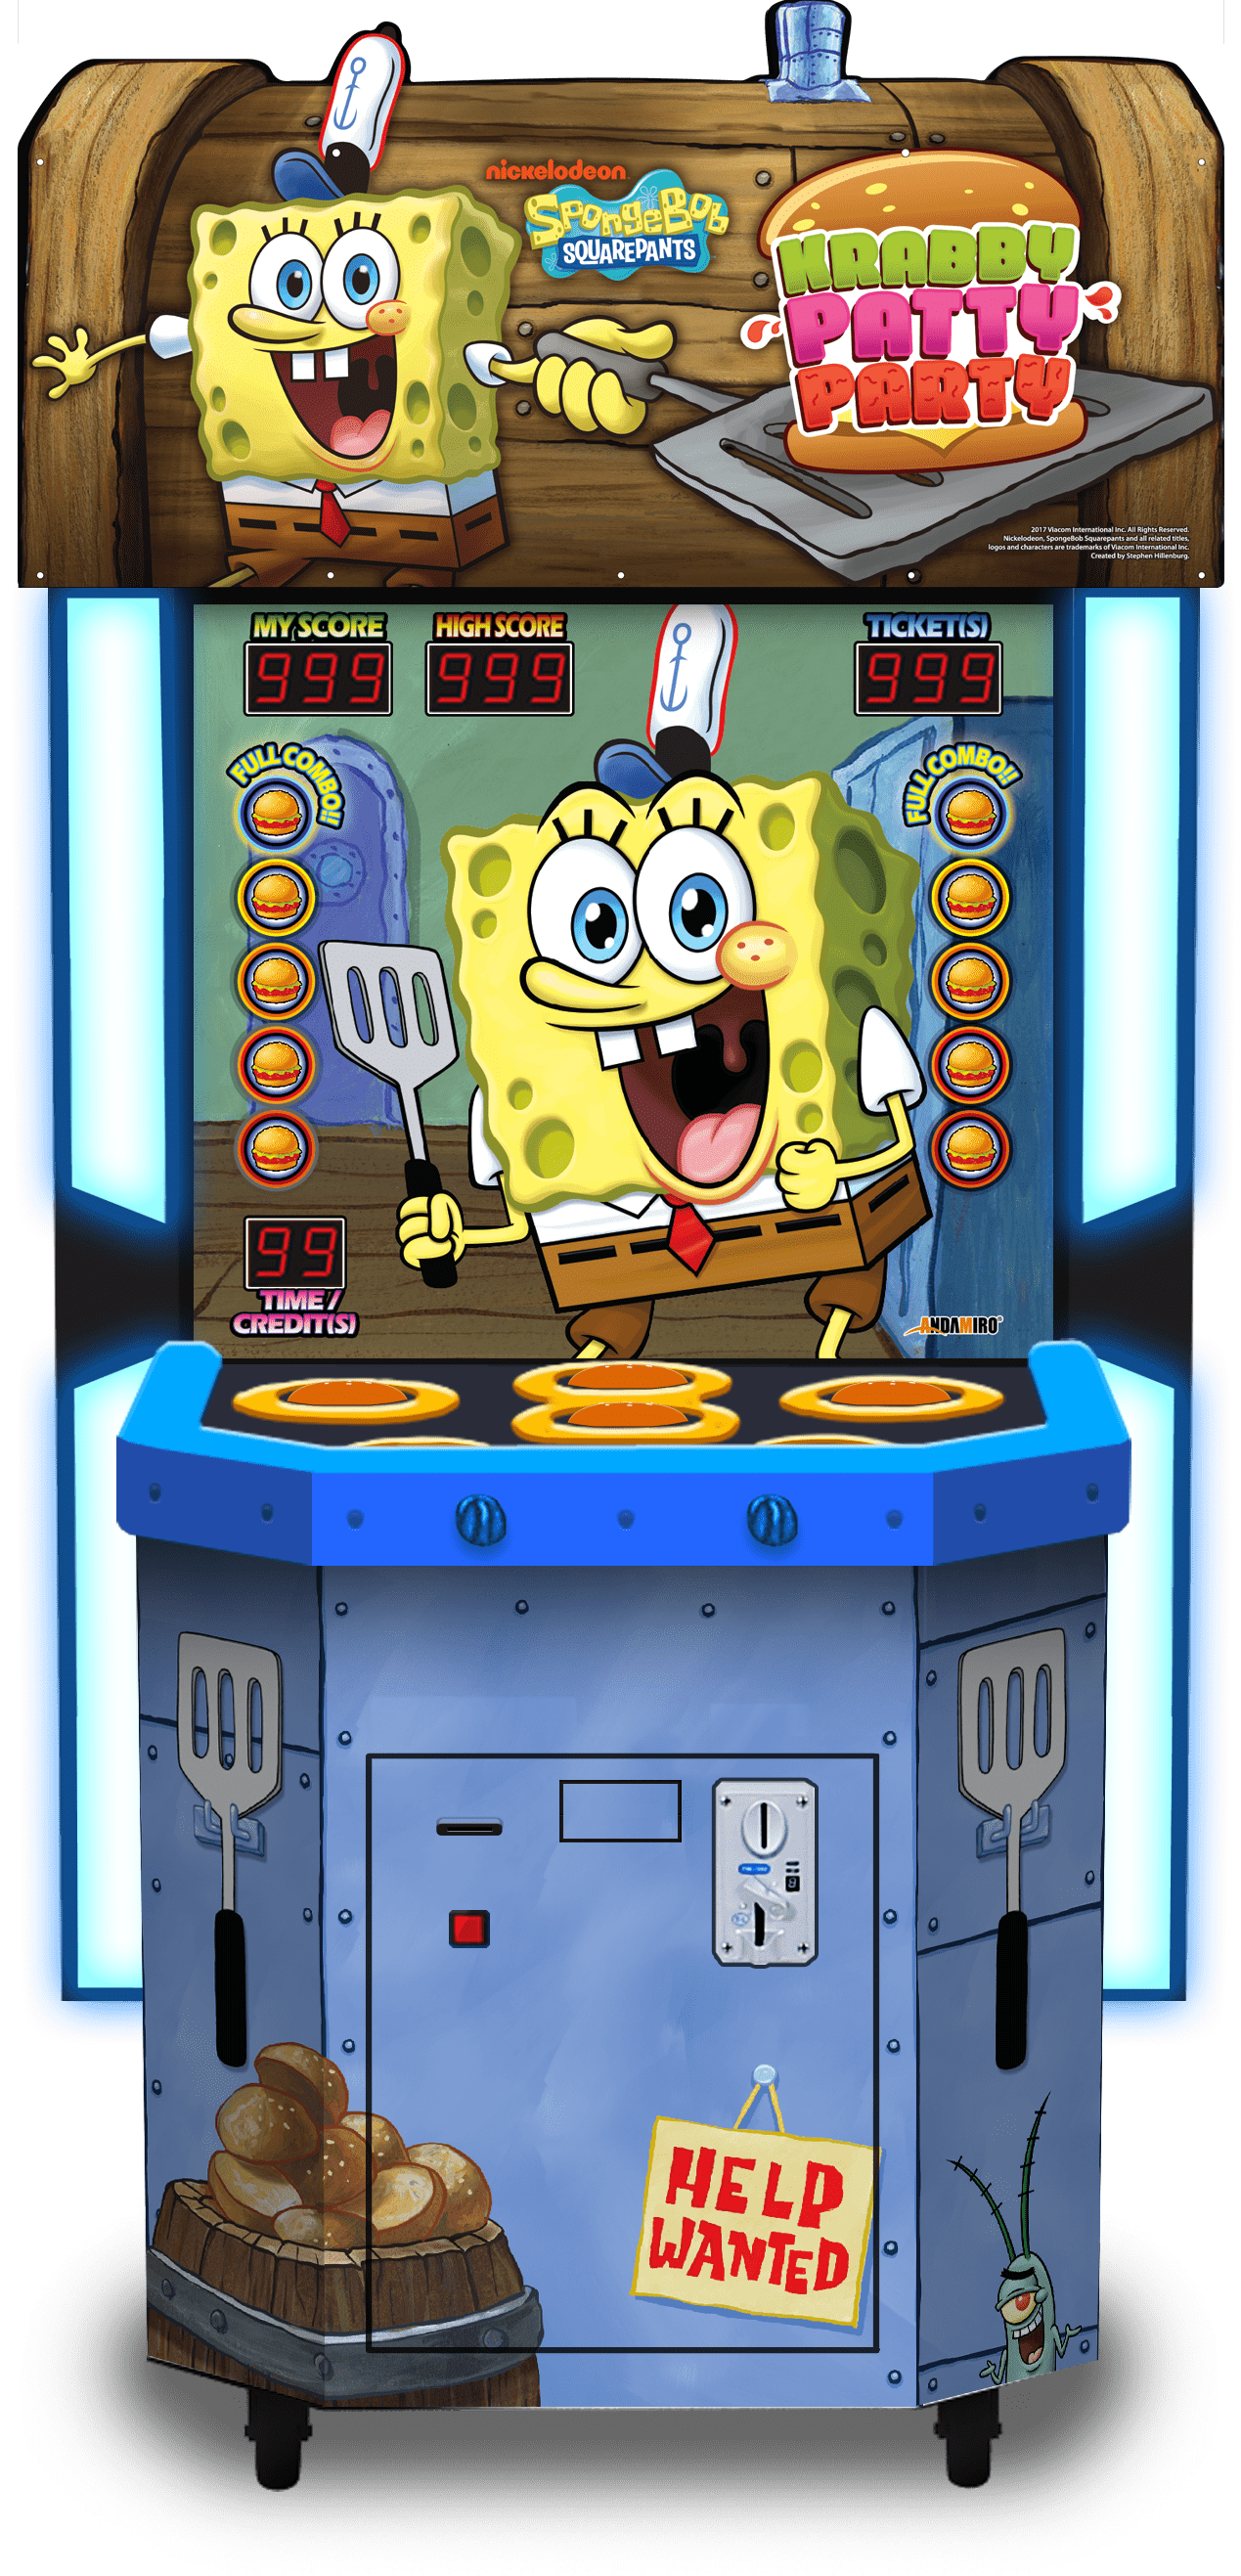 Spongebob Squarepants Nickelodeon SpongeBob SquarePants Krabby